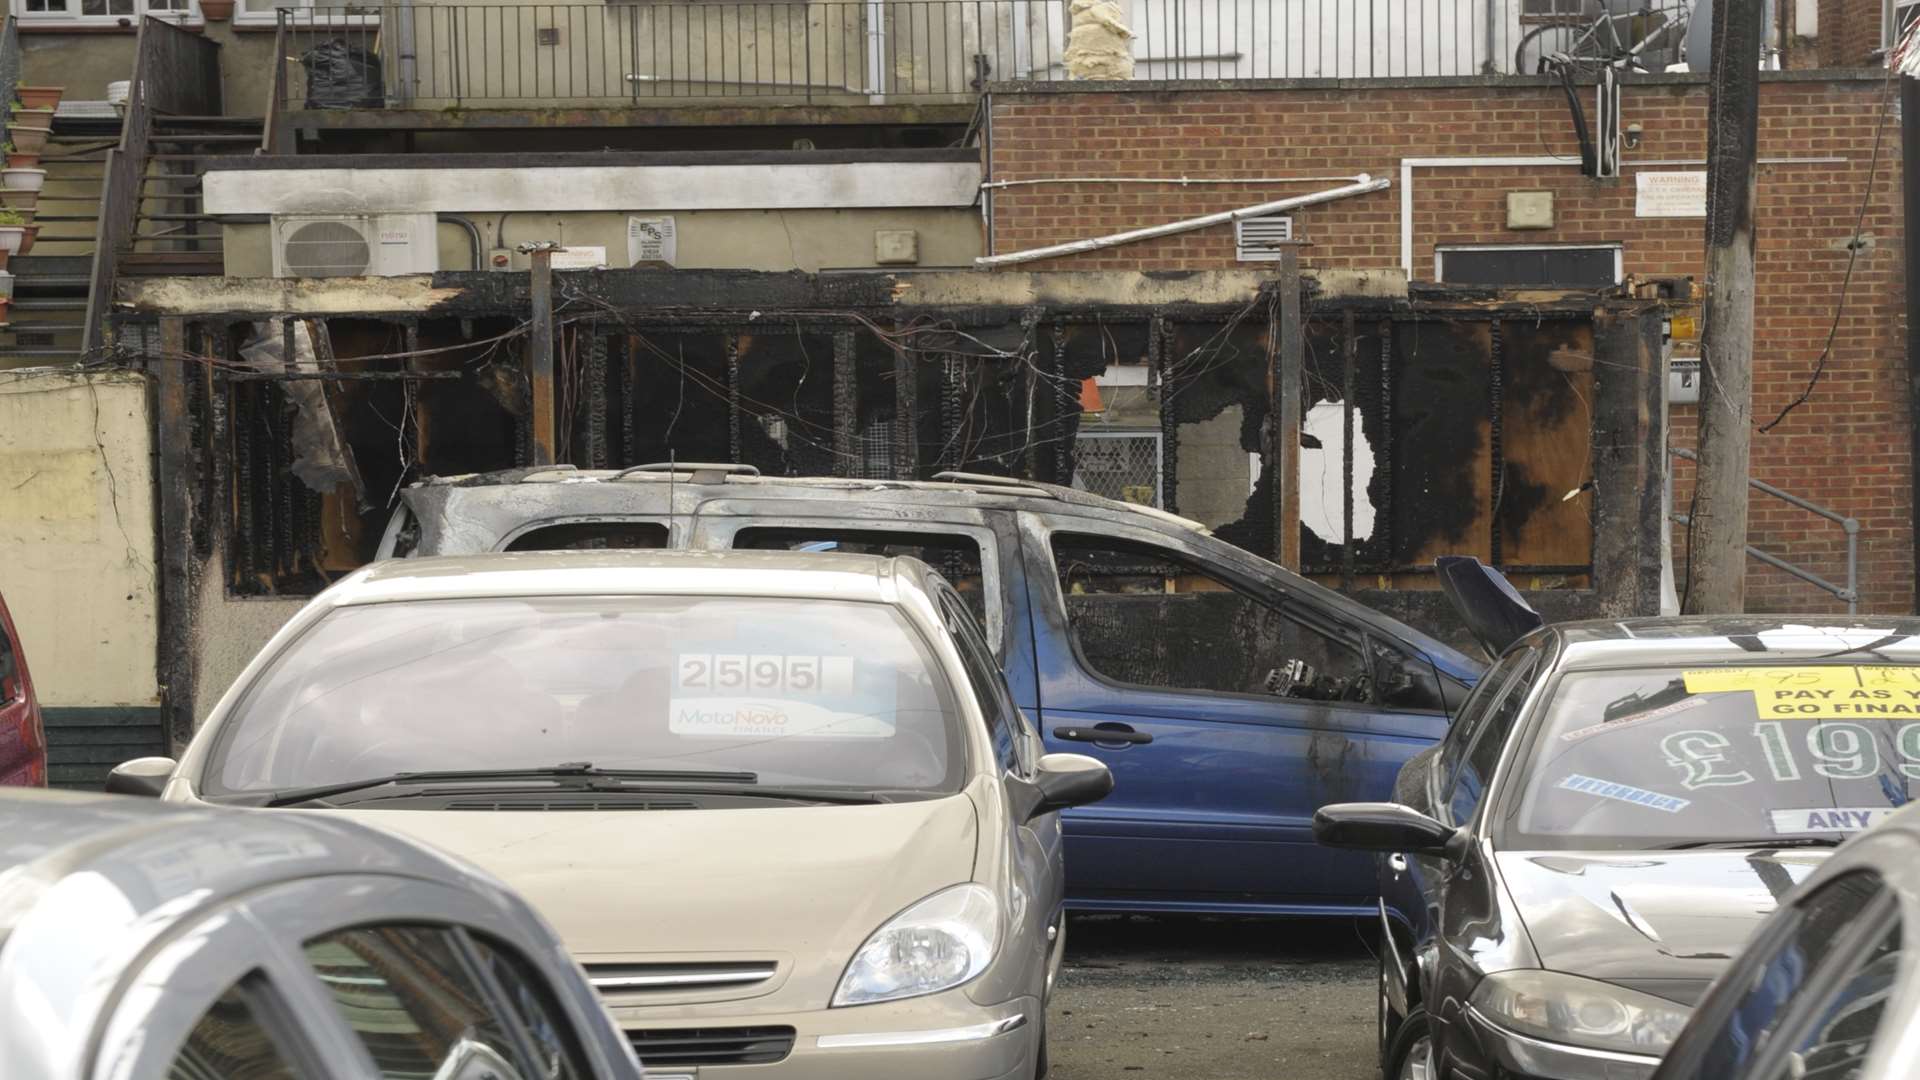 Regency Car Sales following the arson attack